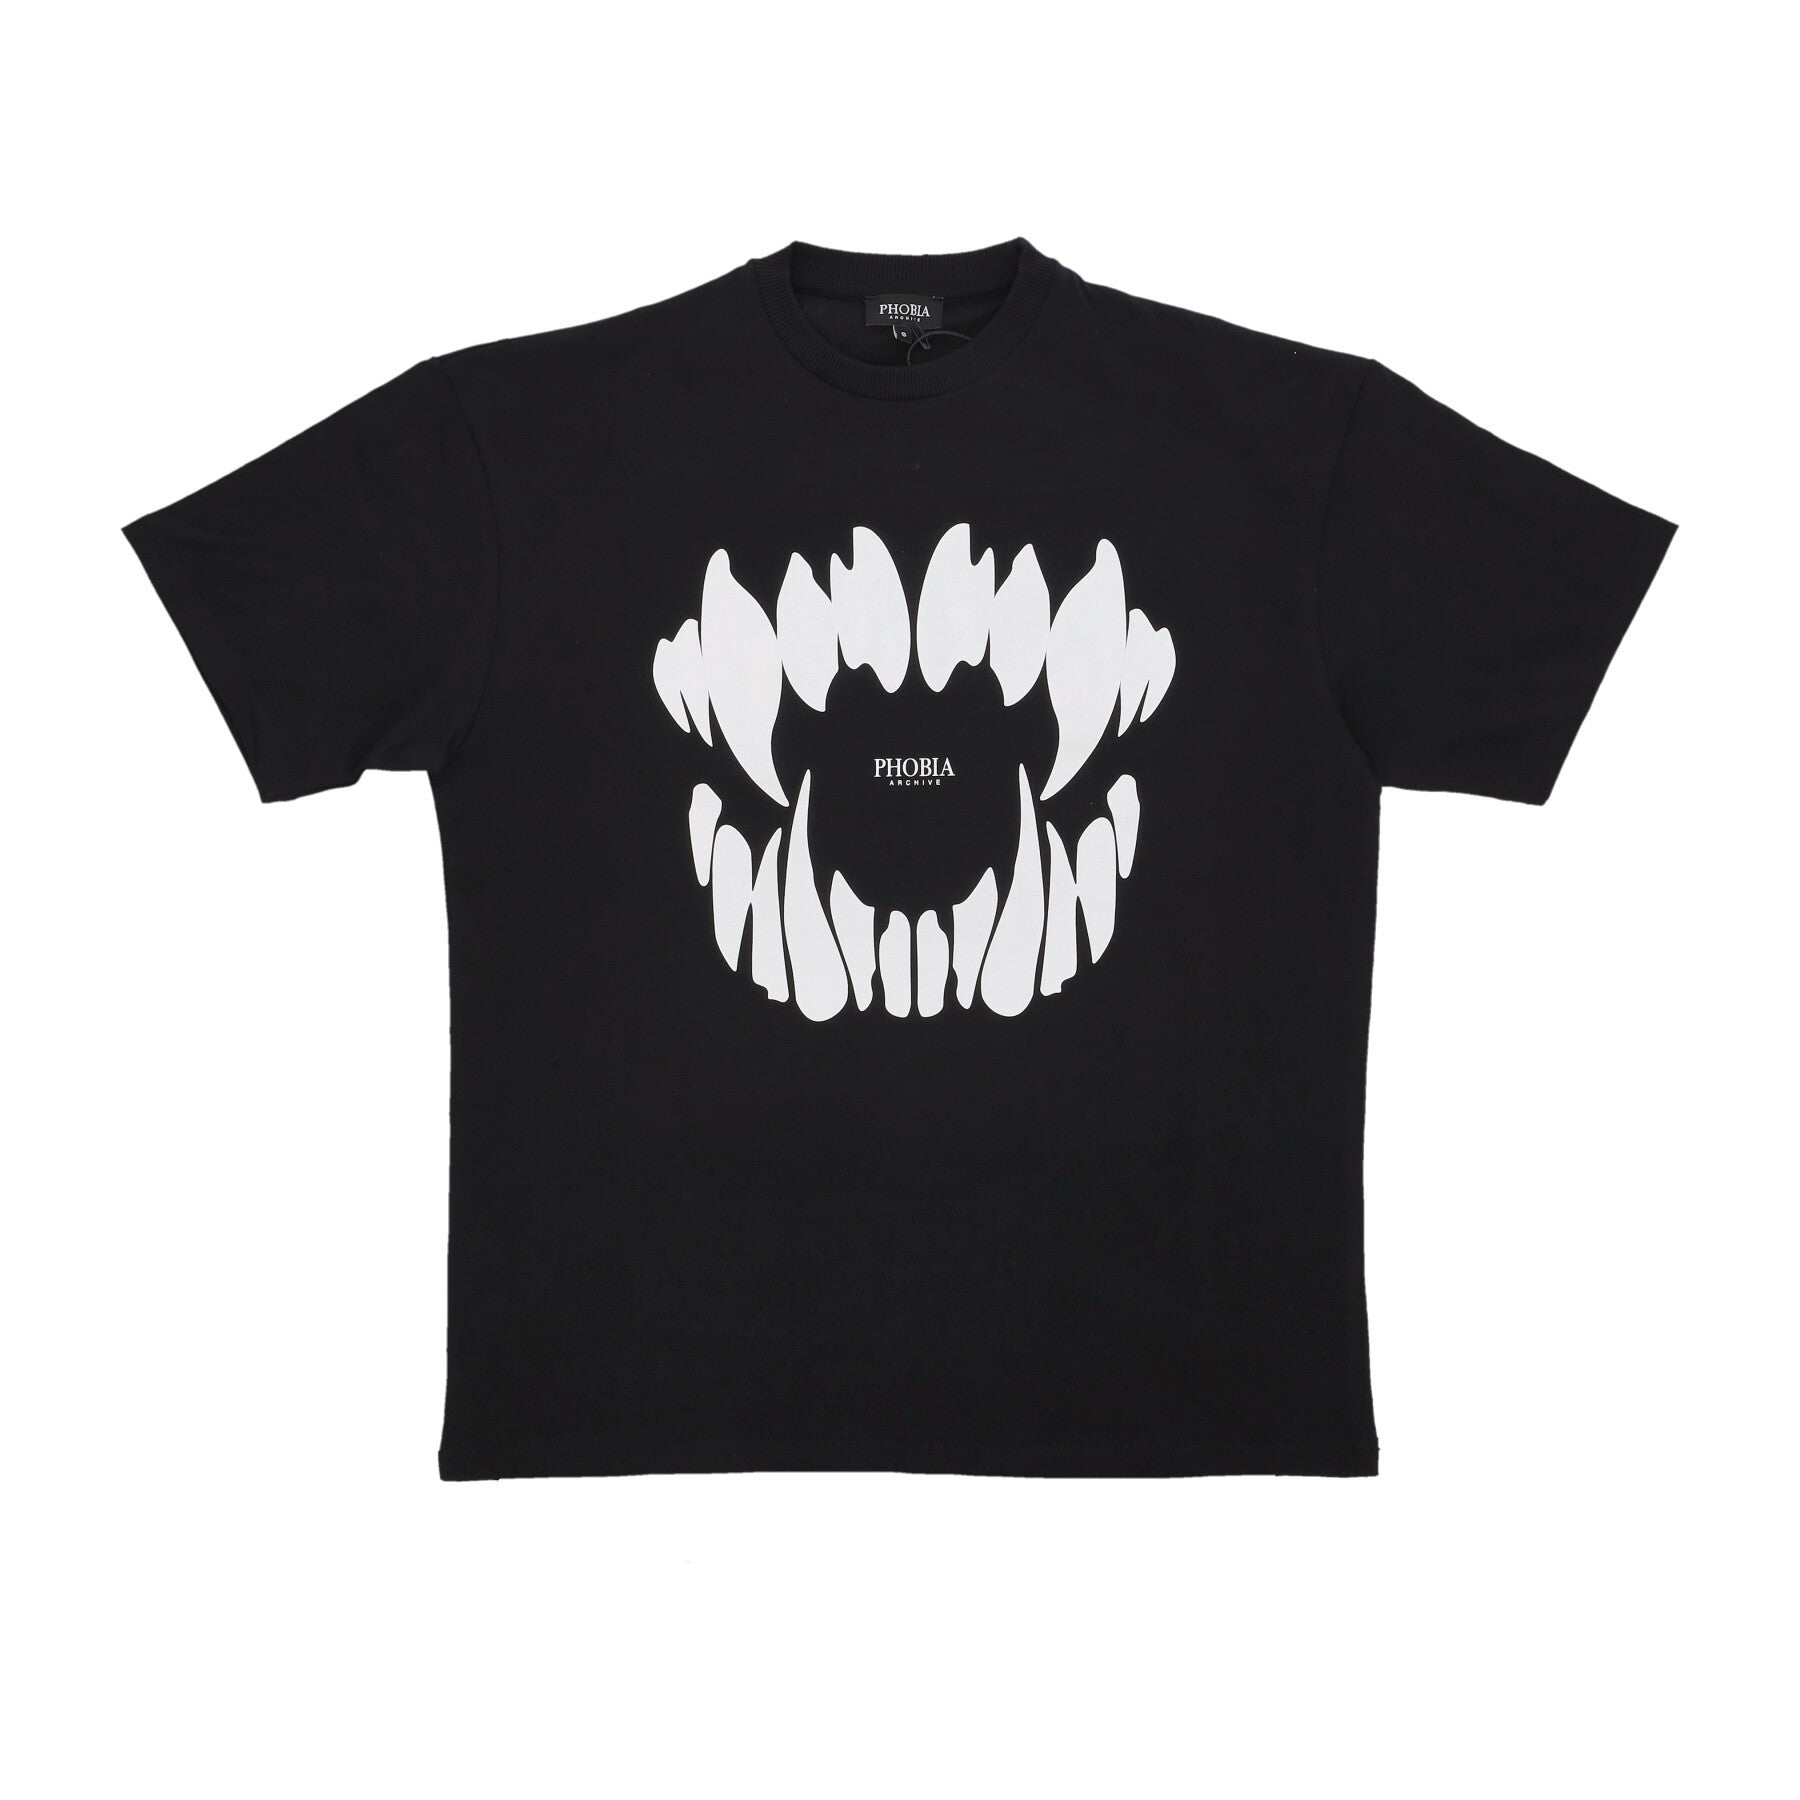 Mouth Print Tee Men's T-Shirt